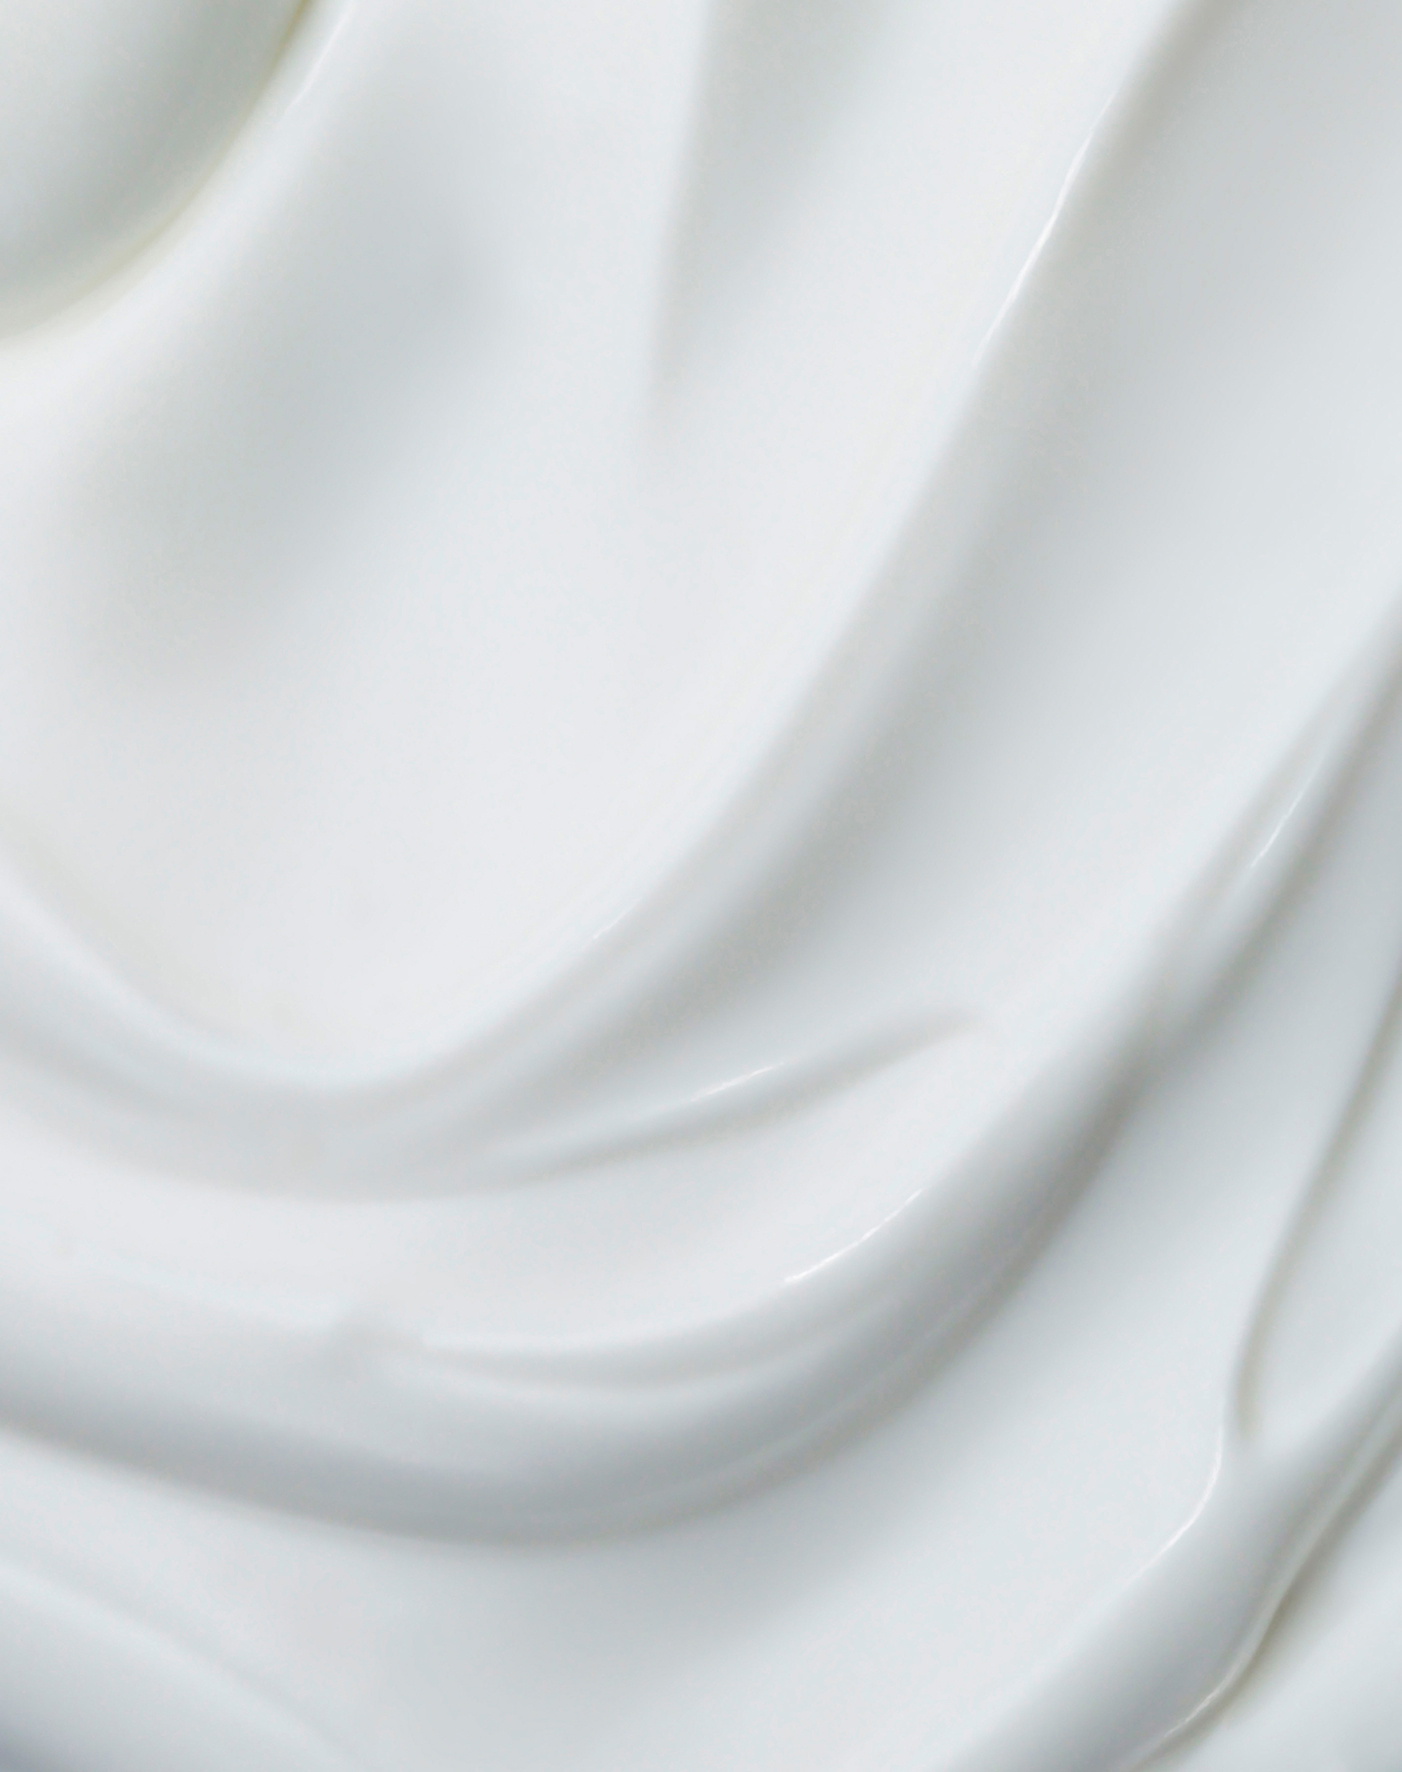 1a--PSD-Yogurt-textura-completo-2